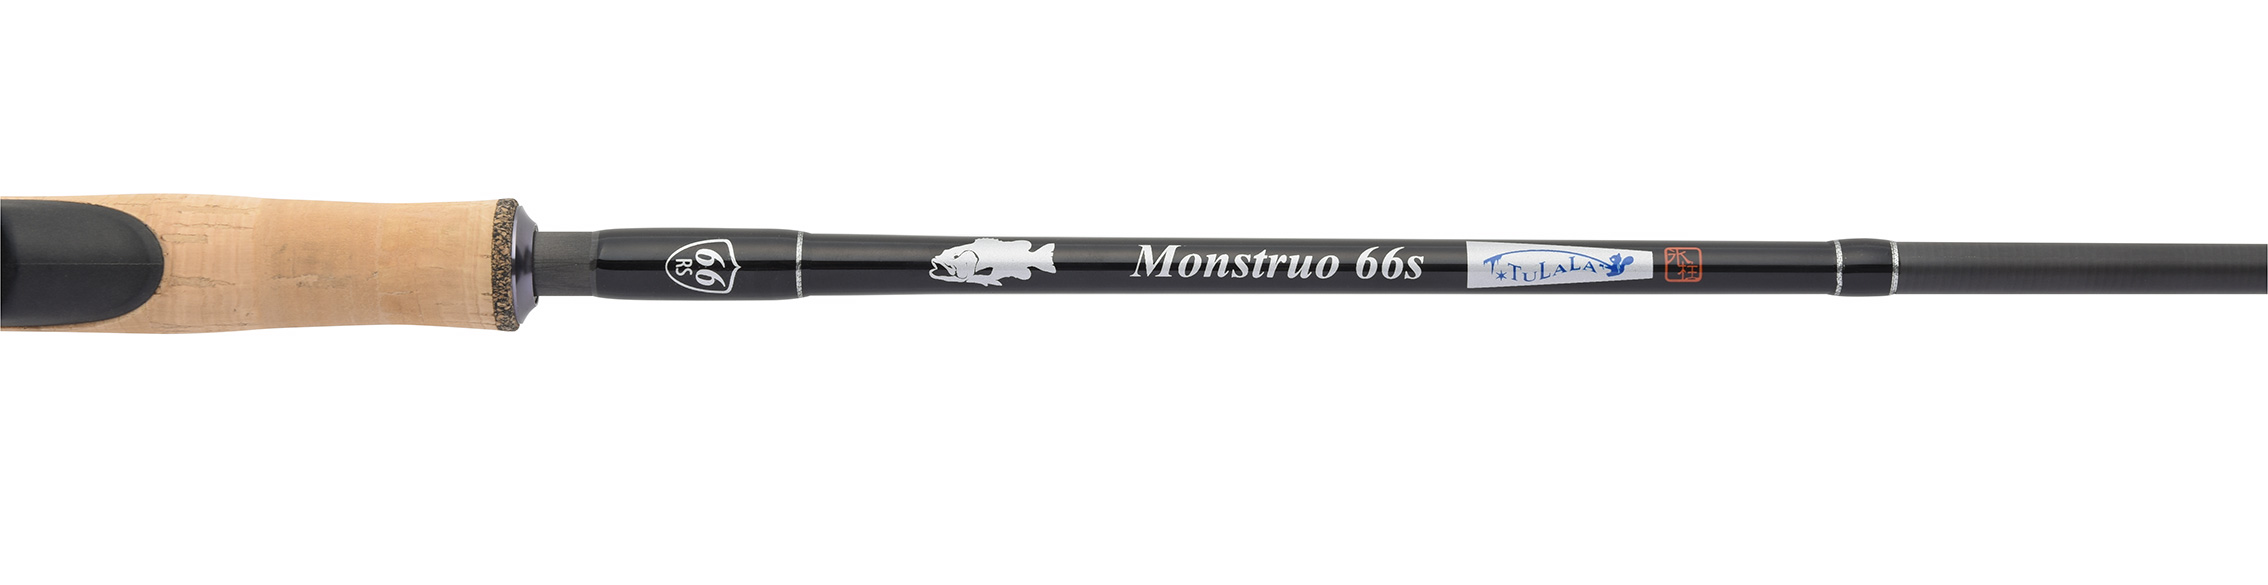 Monstruo 66s | Logo